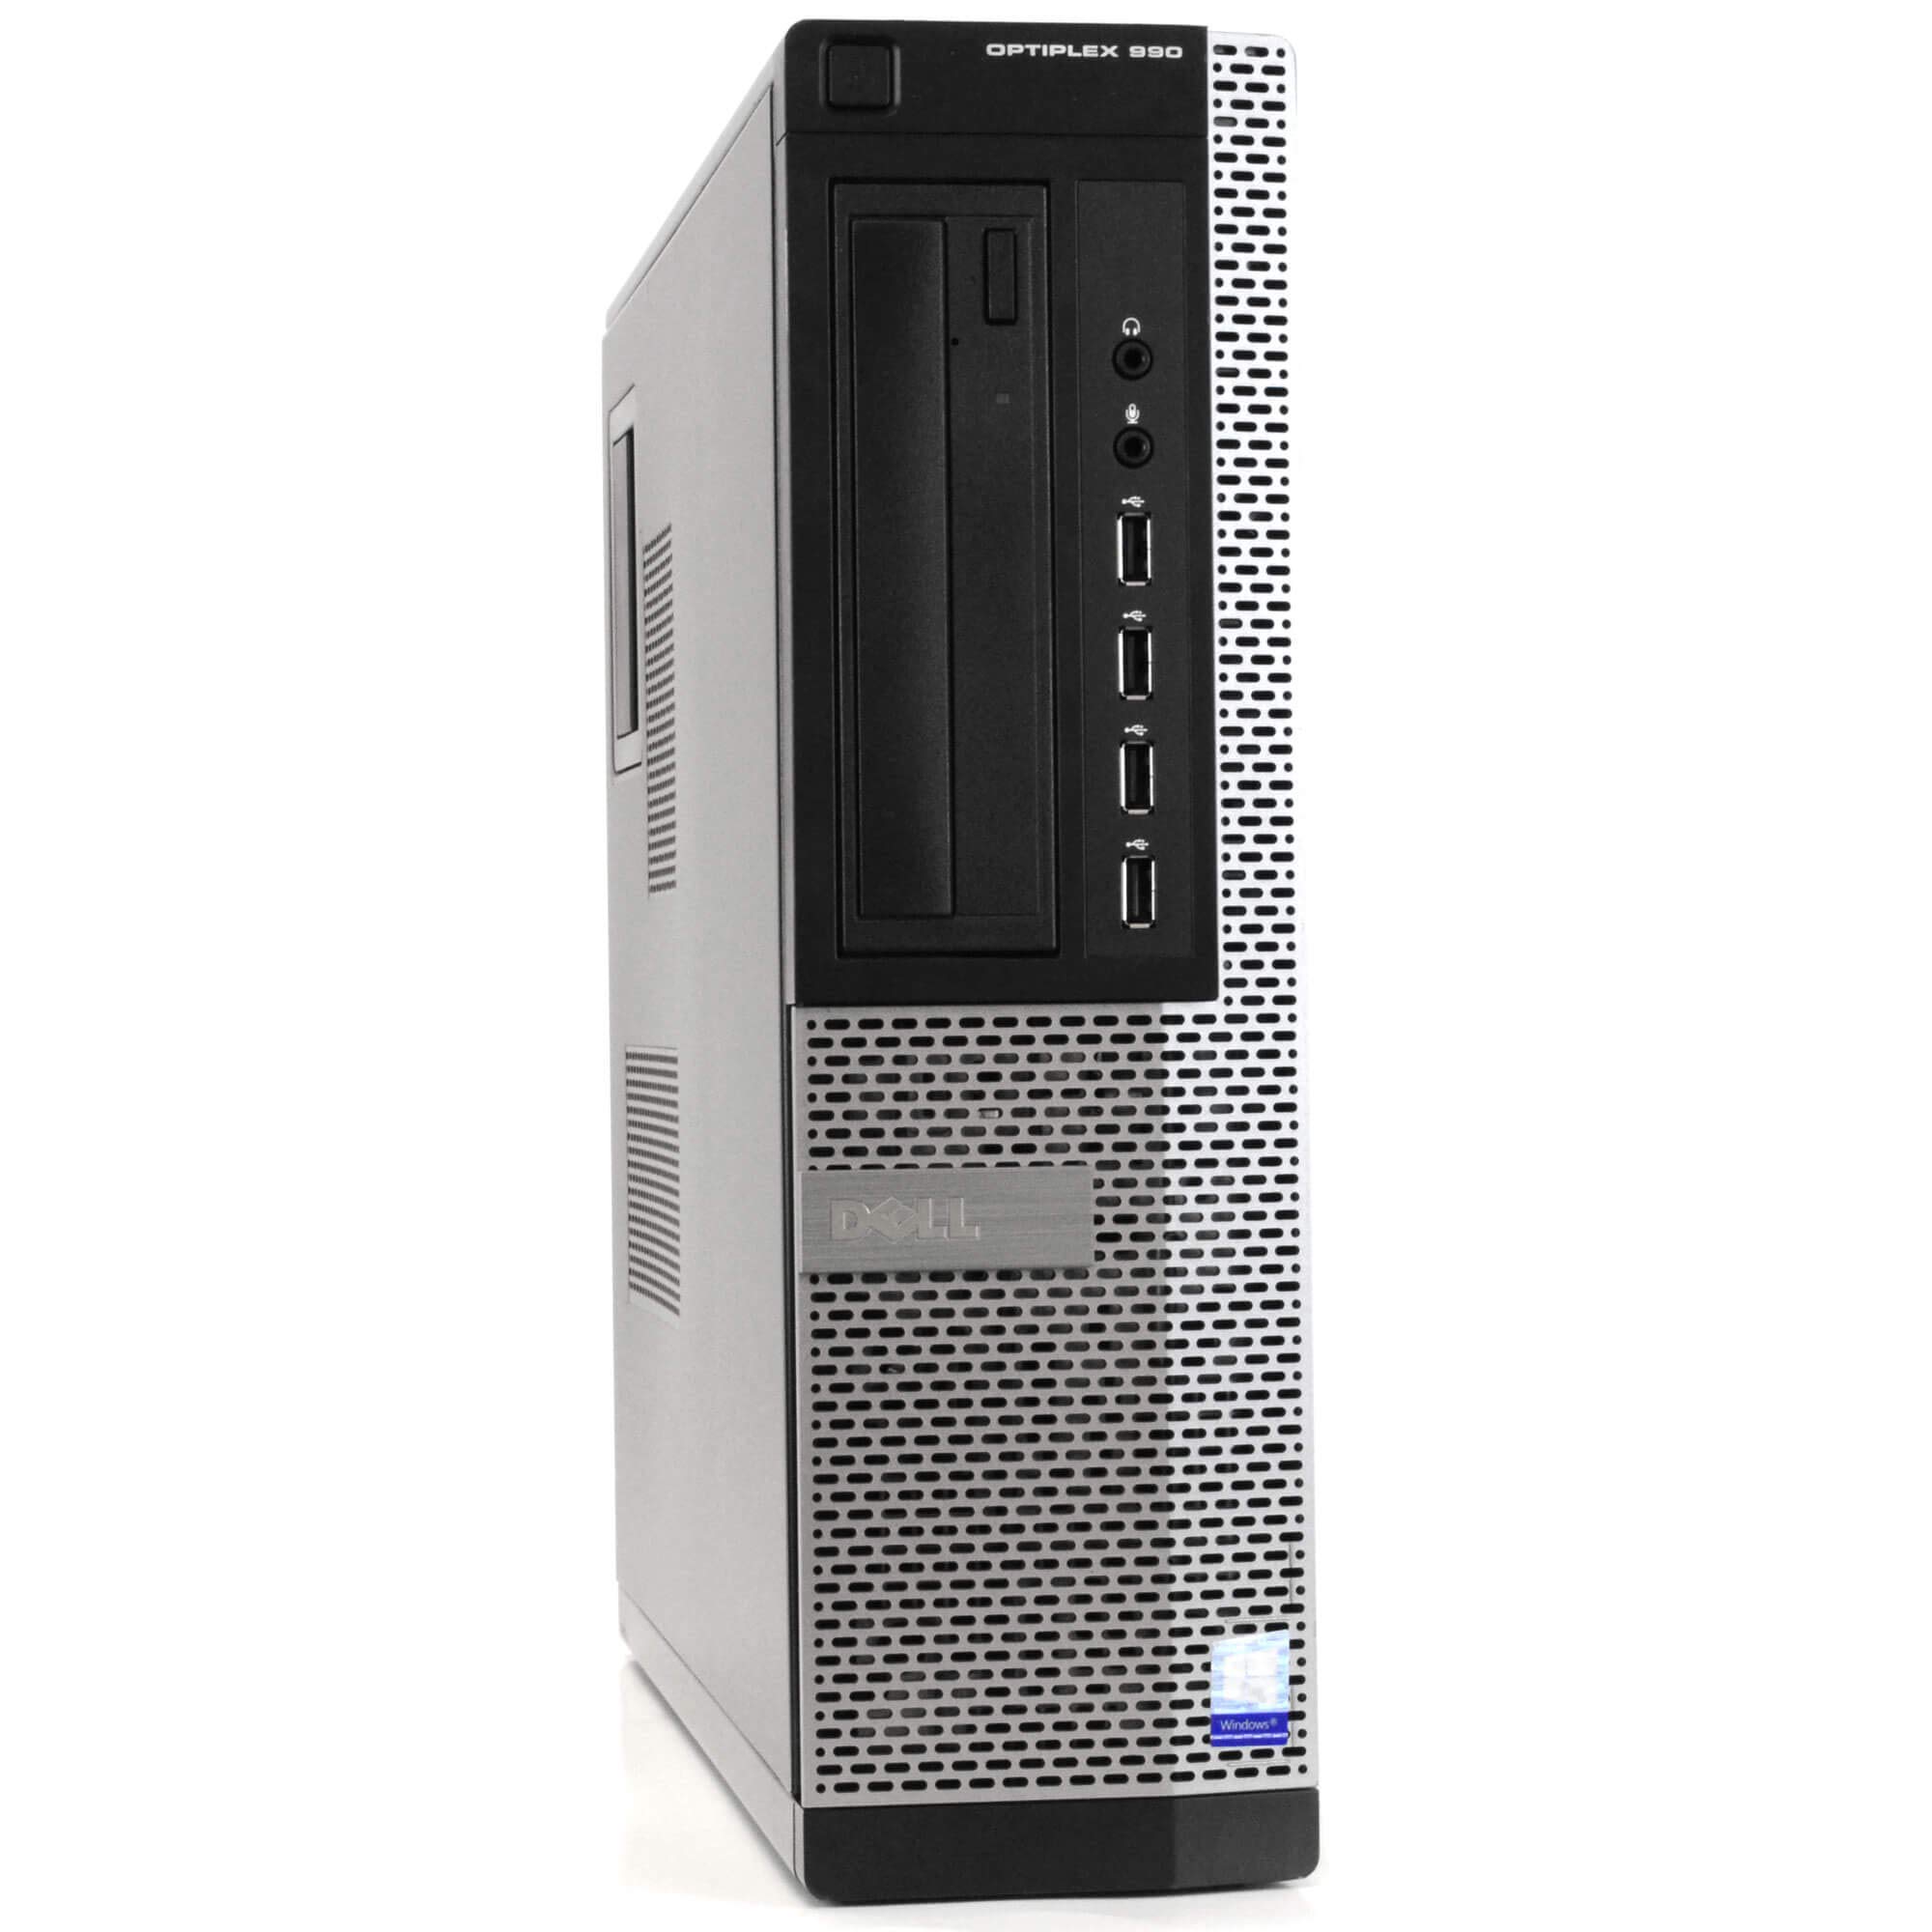 Dell Optiplex 990 Desktop Computer PC, Intel Quad-Core i5, 2TB HDD Storage, 16GB DDR3 RAM, Windows 10 Pro, DVD, WiFi, 20in Monitor, RGB Productivity Bundle (Renewed)